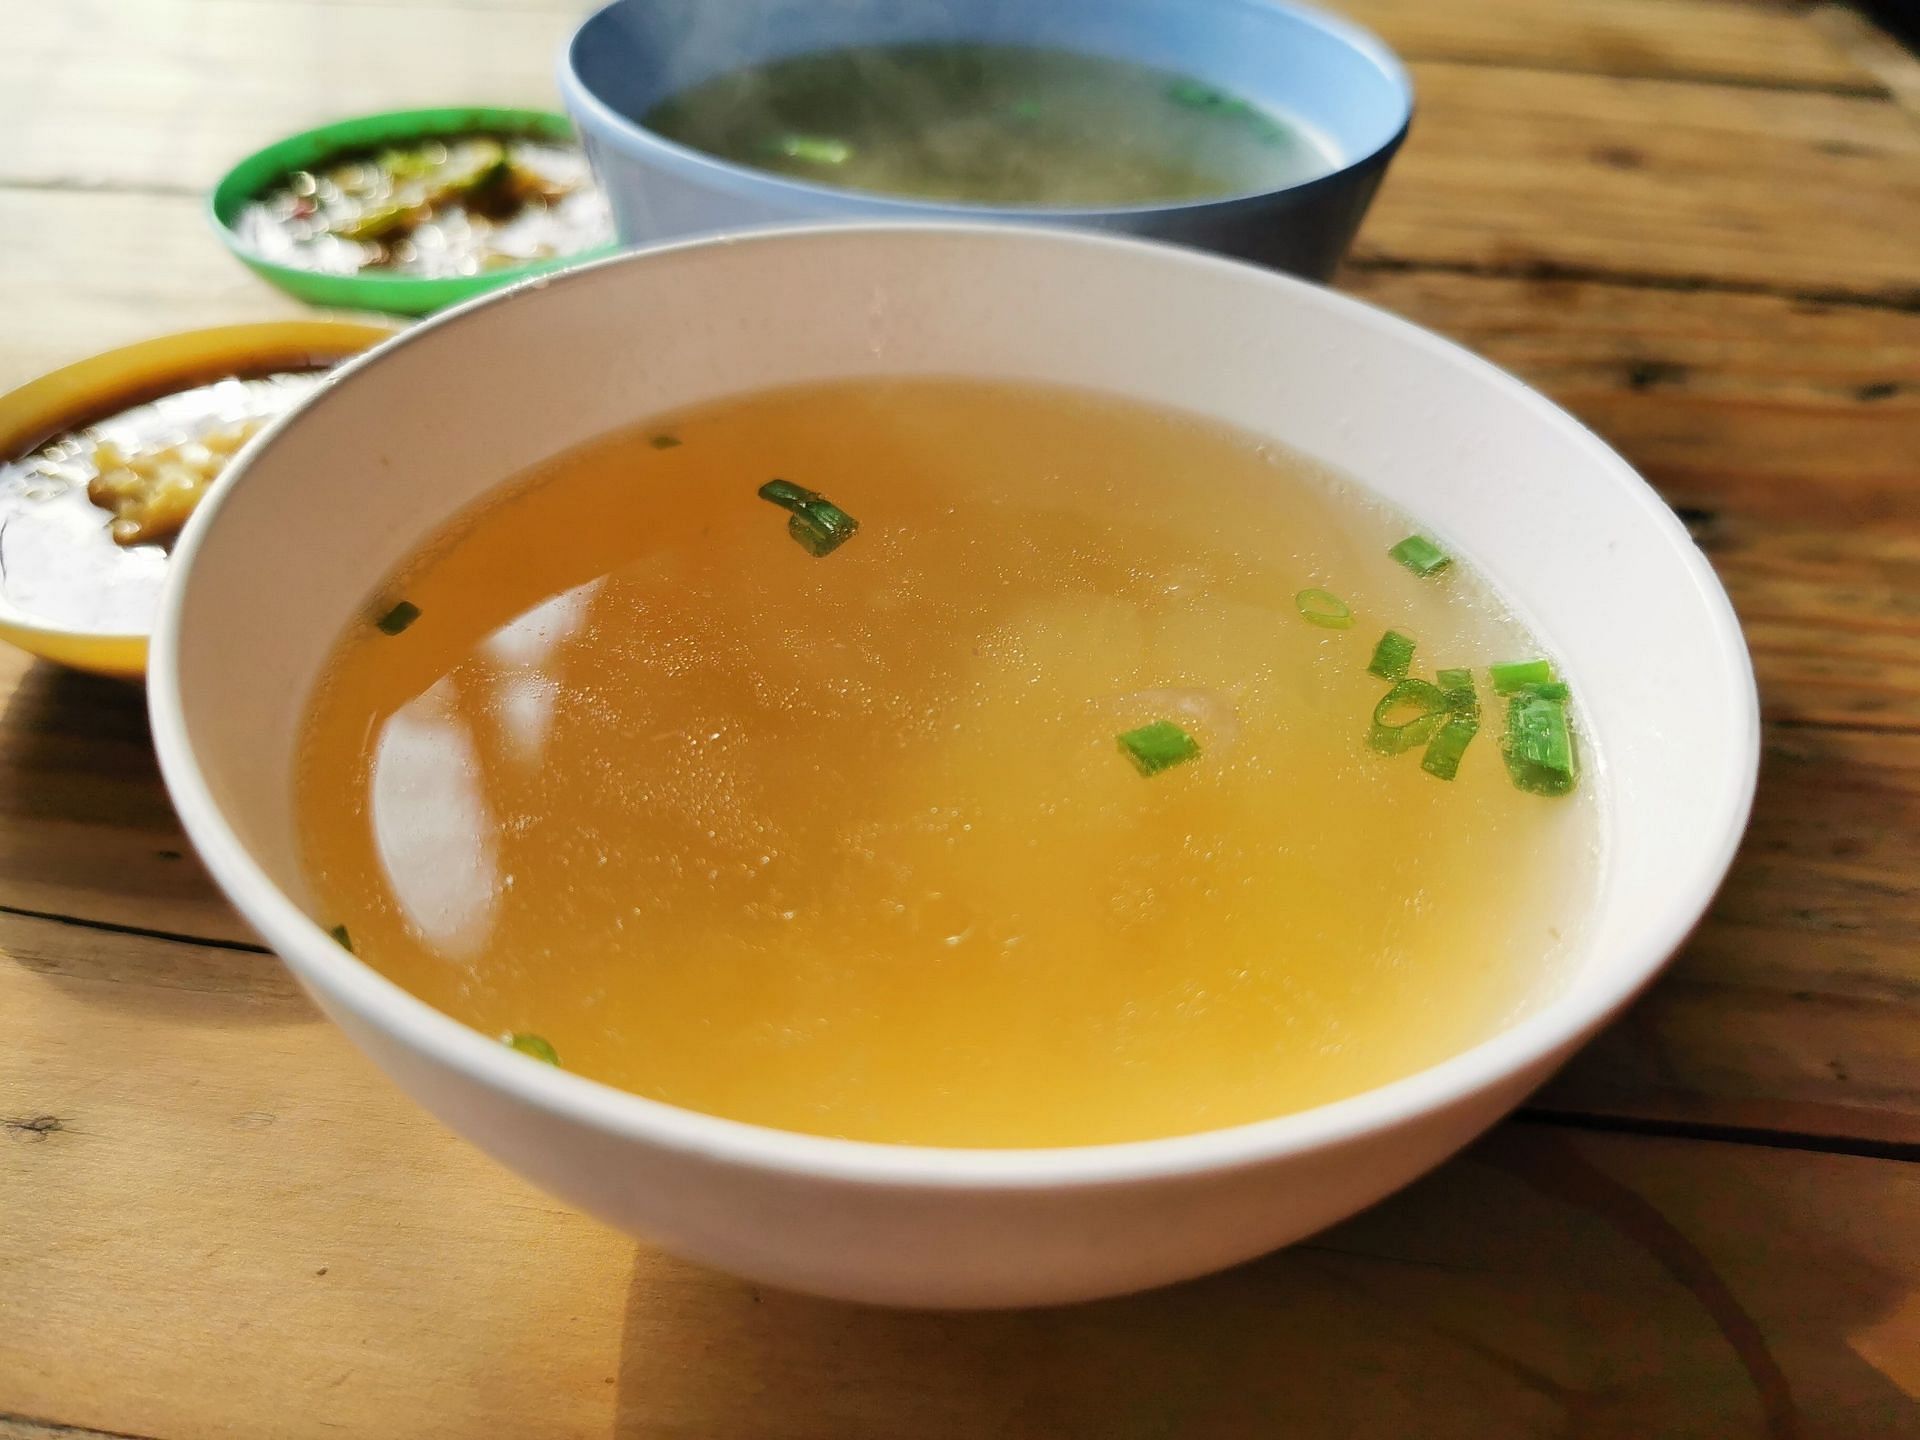 Miso paste is the base of this soup. (Image via Pexels/Jenvit Keiwalinsarid)